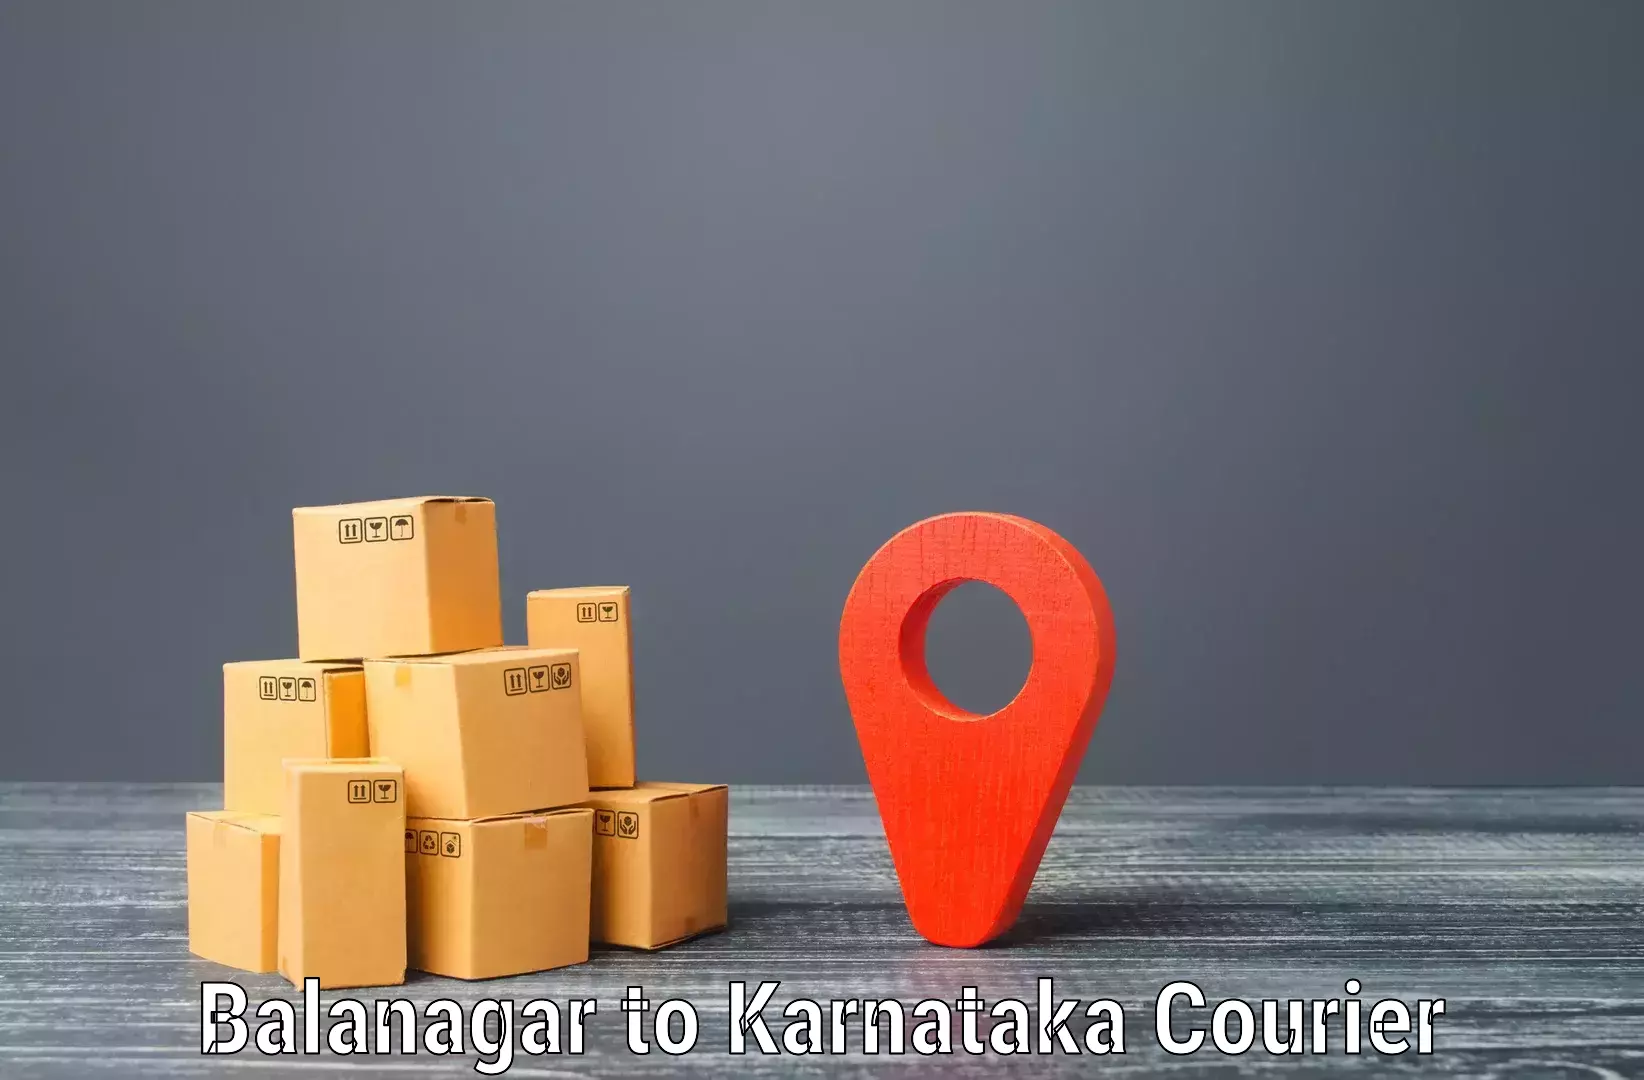 Courier service comparison Balanagar to Dharmasthala